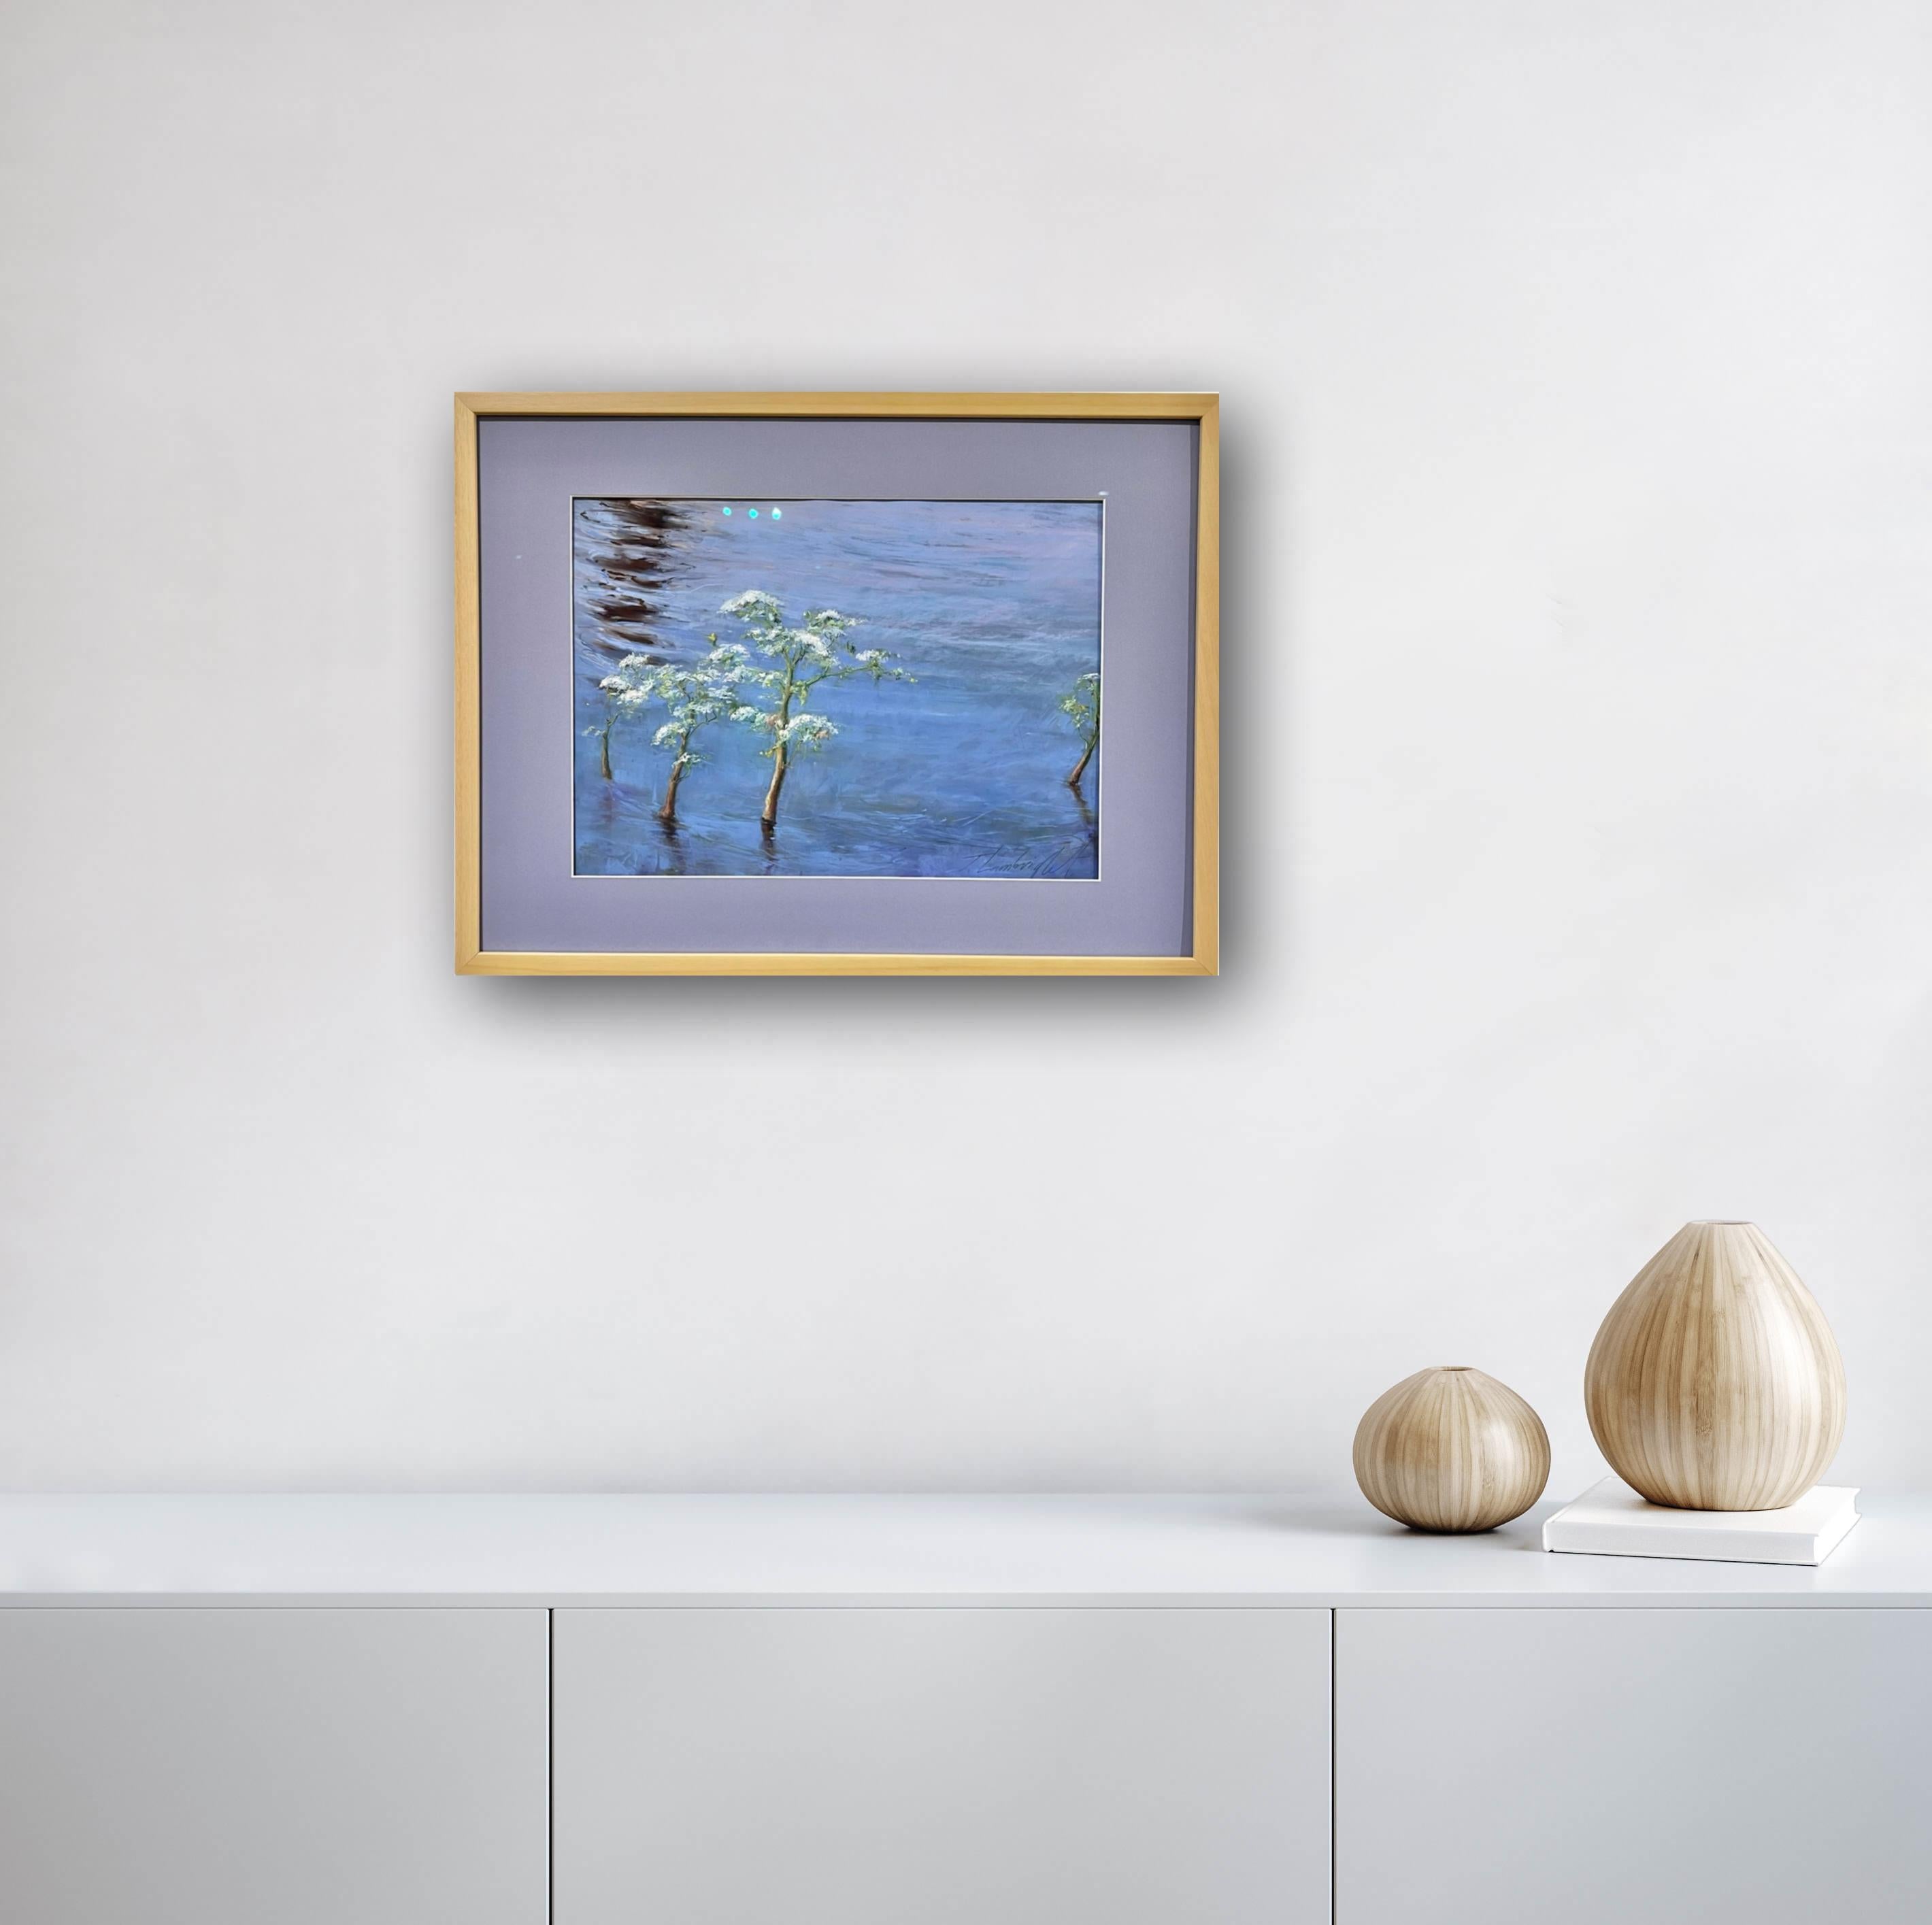 Julia Lambright

Smokefall

Soft pastel on pastel board

Image size: 11” x 13.5”

Framed size: 17” x 21”

2022
